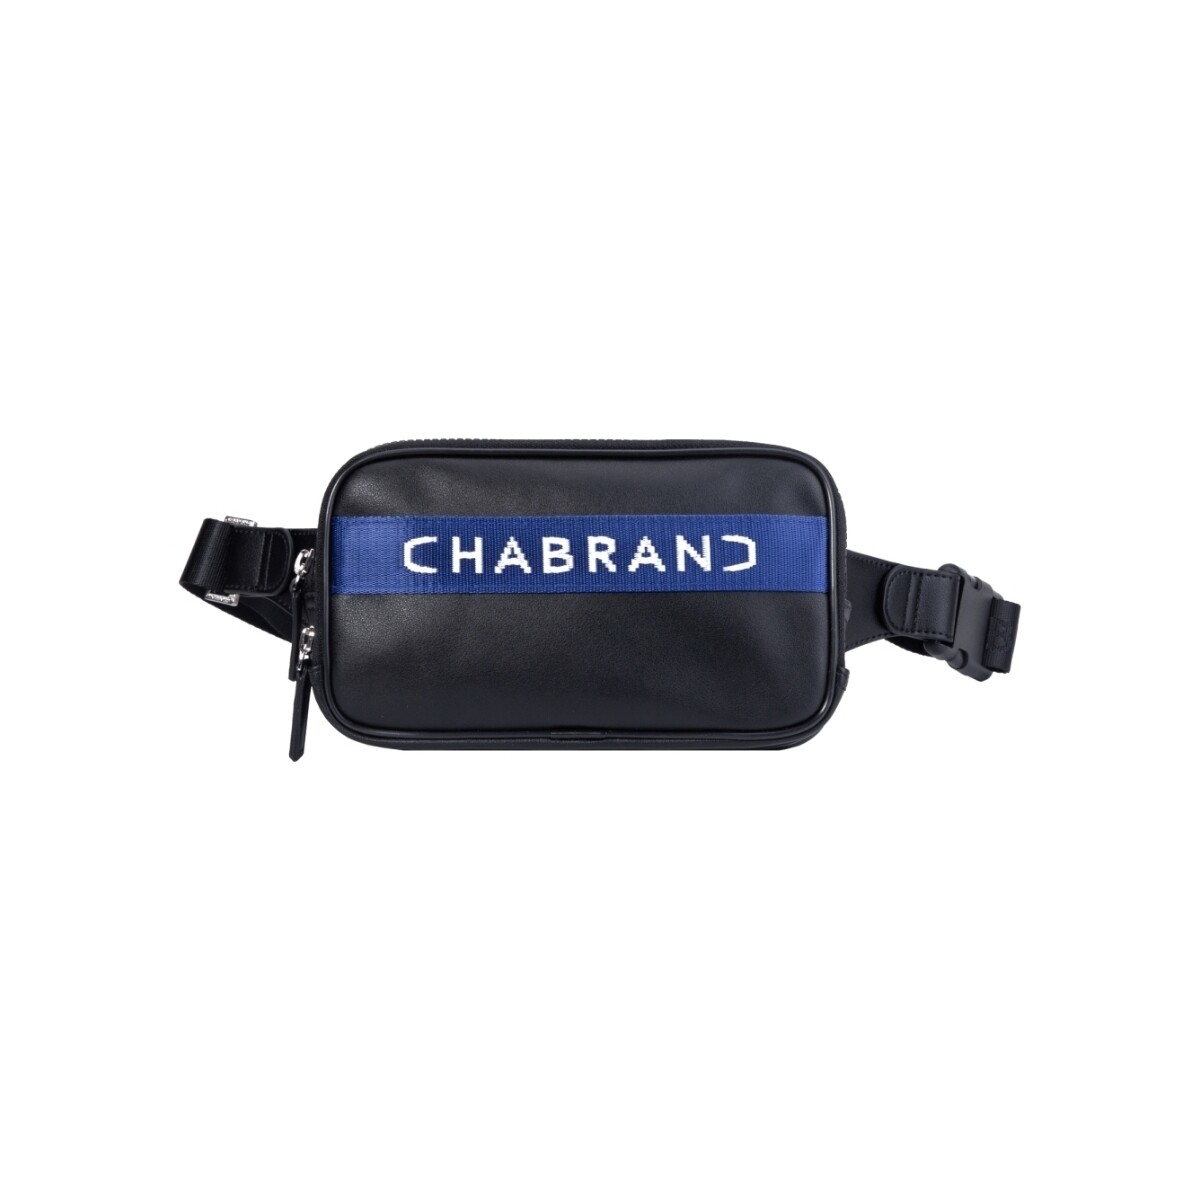 Chabrand Noir Banane Ref 44673 127 Noir Bleu 22*13*6 cm kKlWfX55